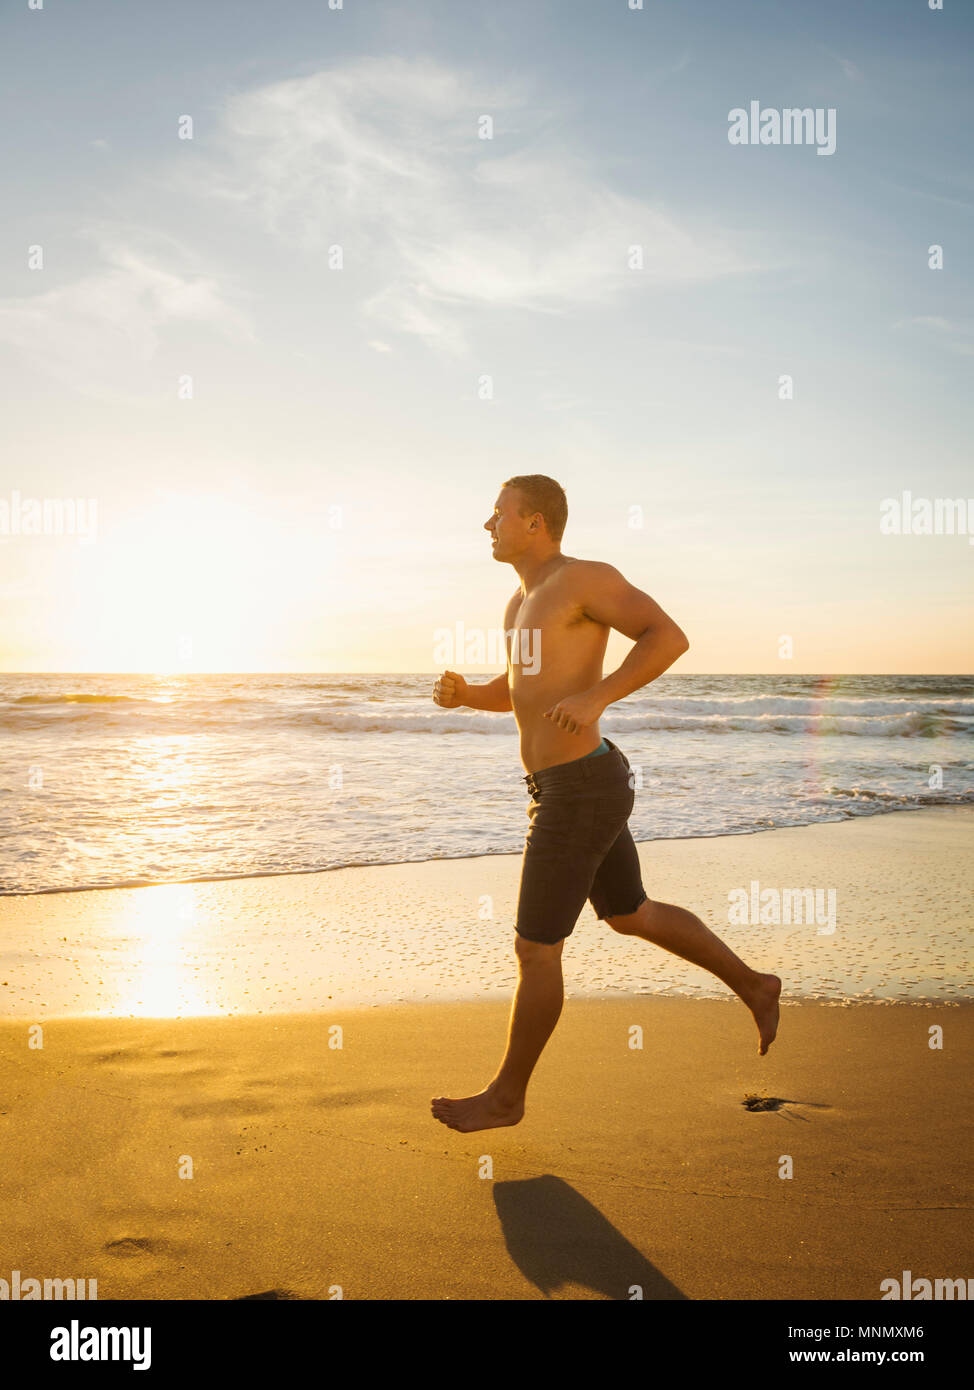 Man jogging along beach Stock Photo